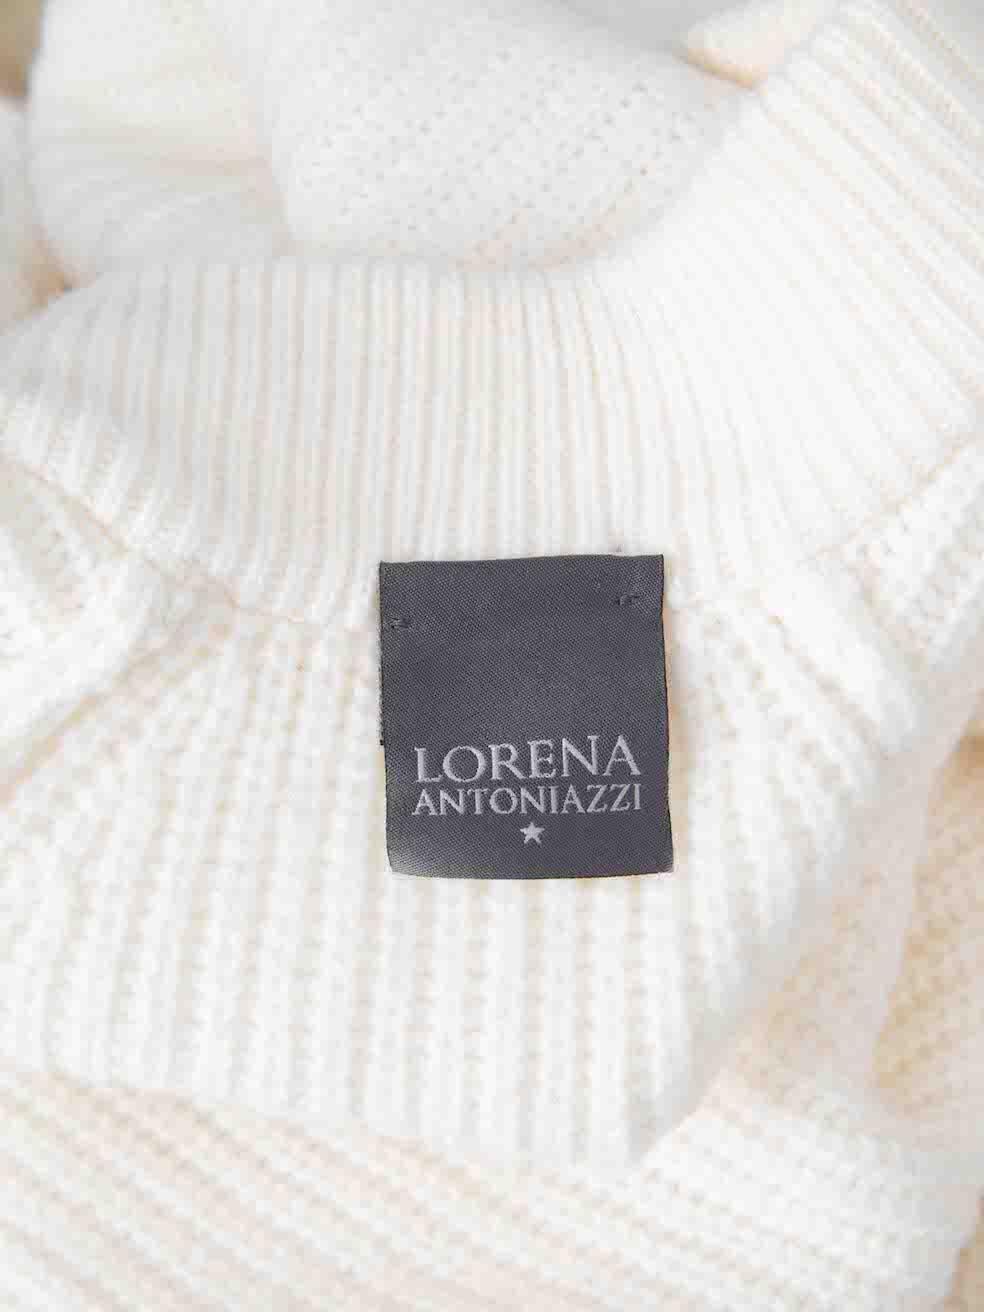 Lorena Antoniazzi White Brushed Knit Dress Size M For Sale 1